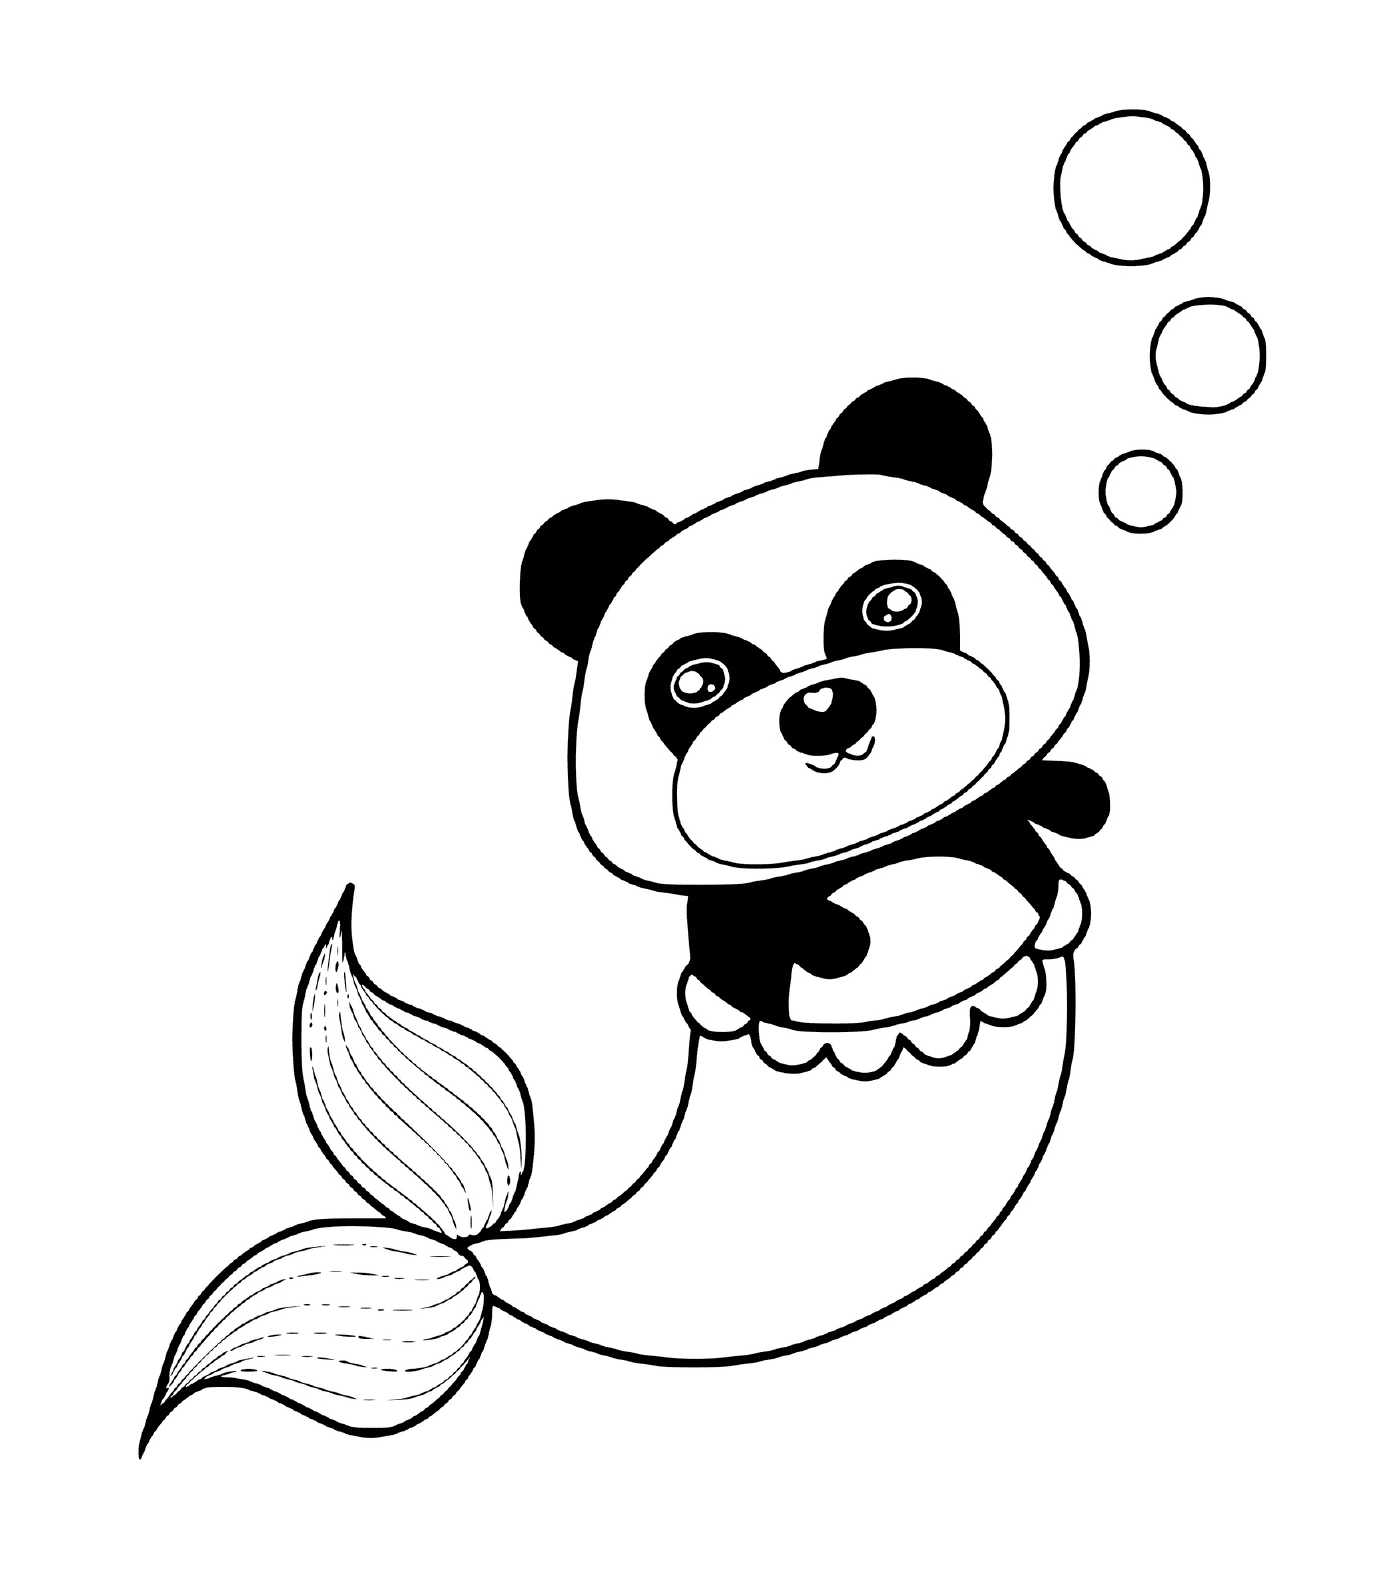  Panda sitting on a sirene 